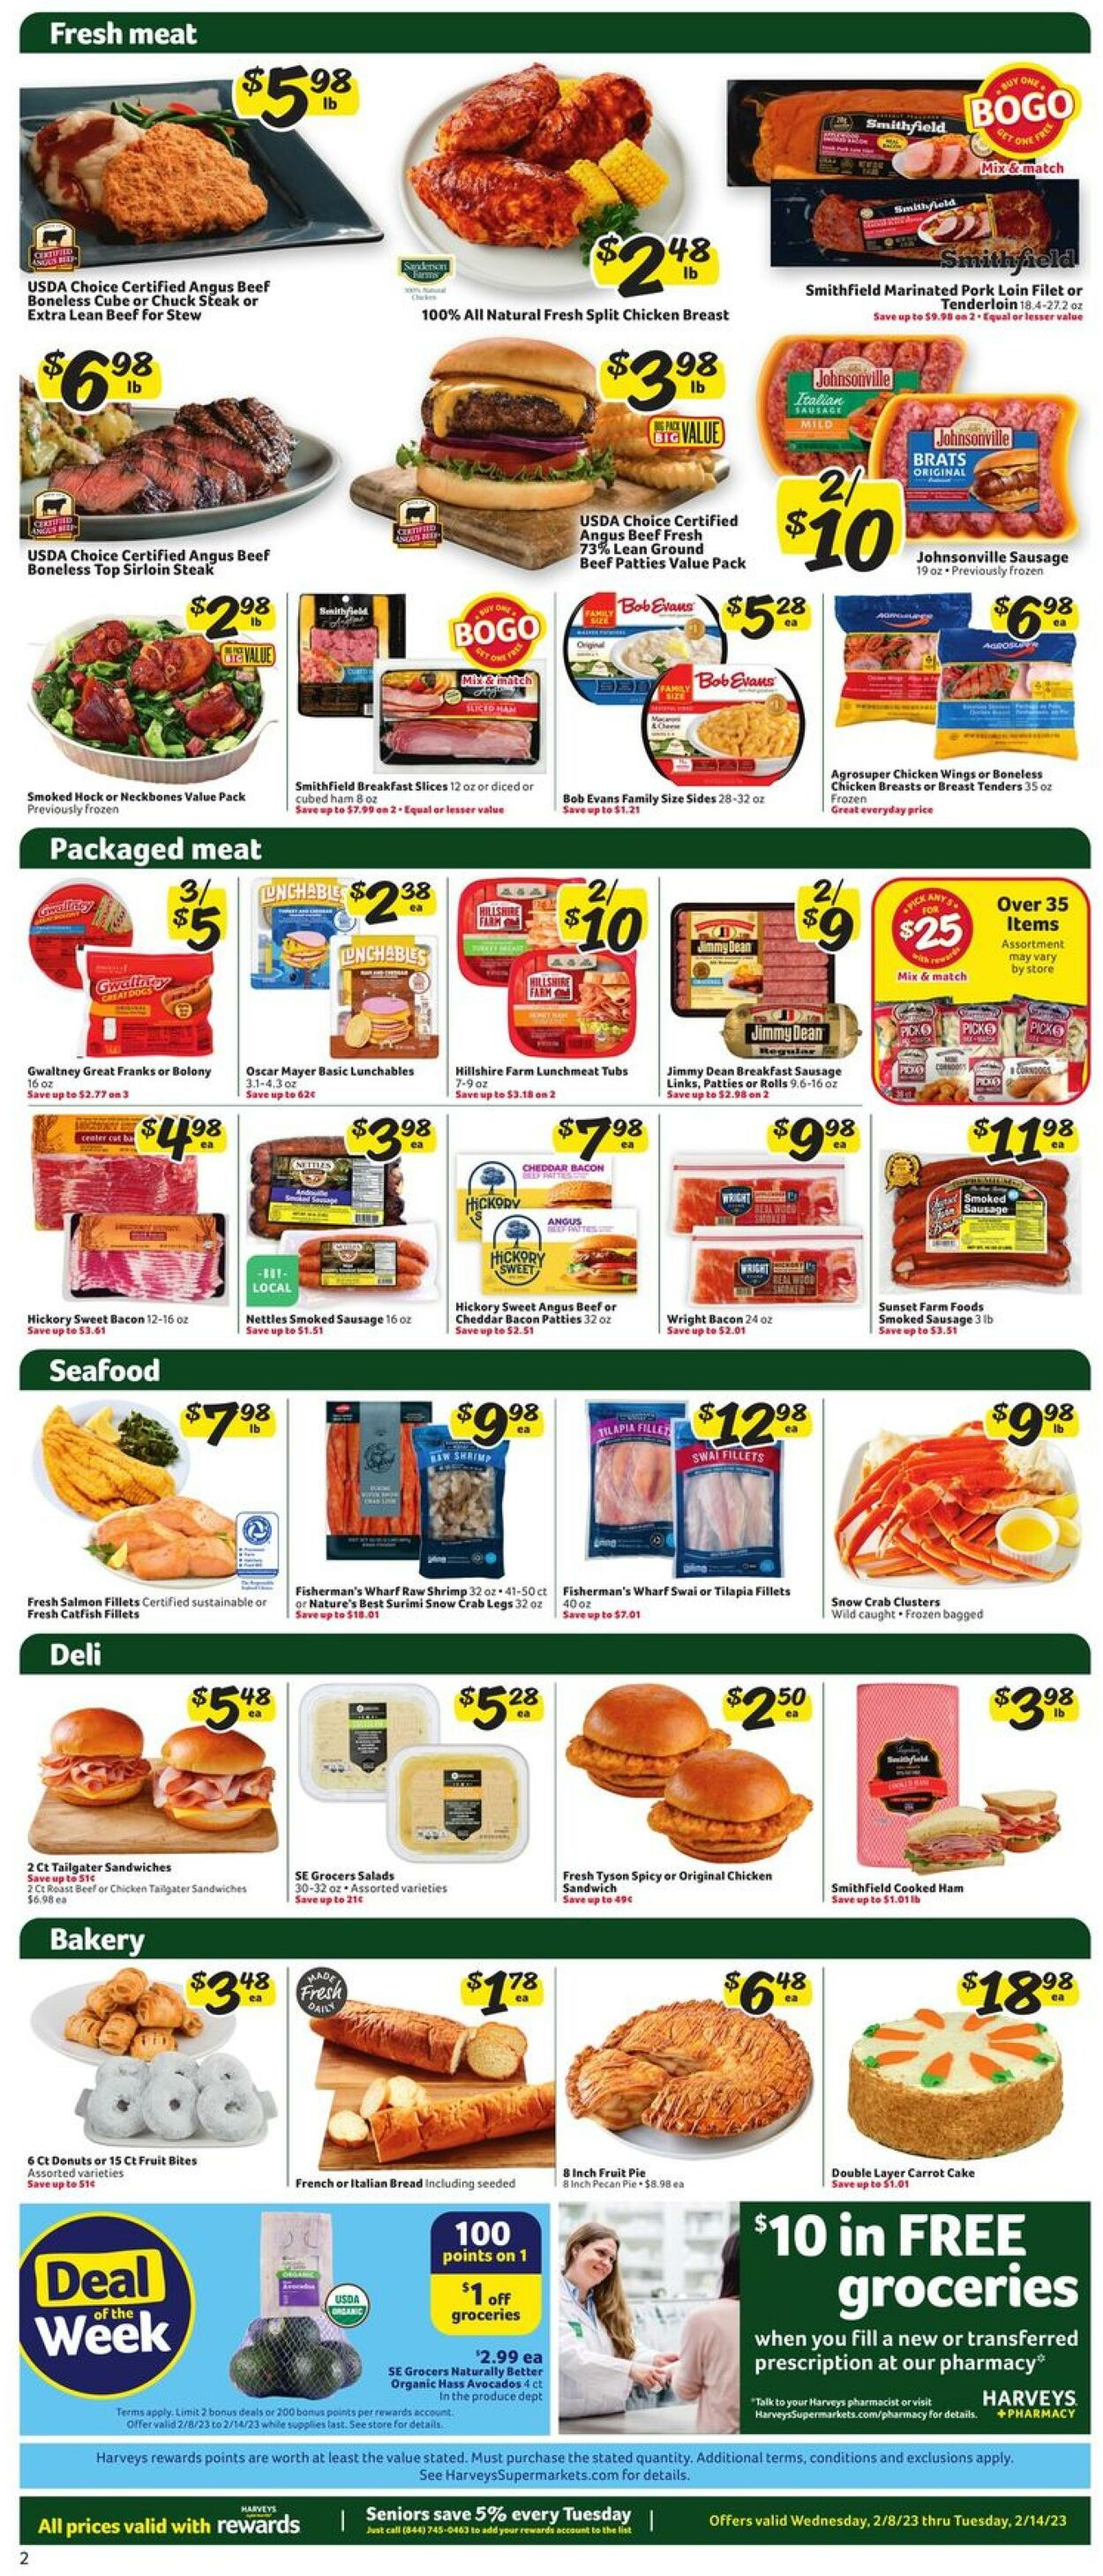 Weekly ad Harvey's Supermarkets 02/08/2023 - 02/14/2023